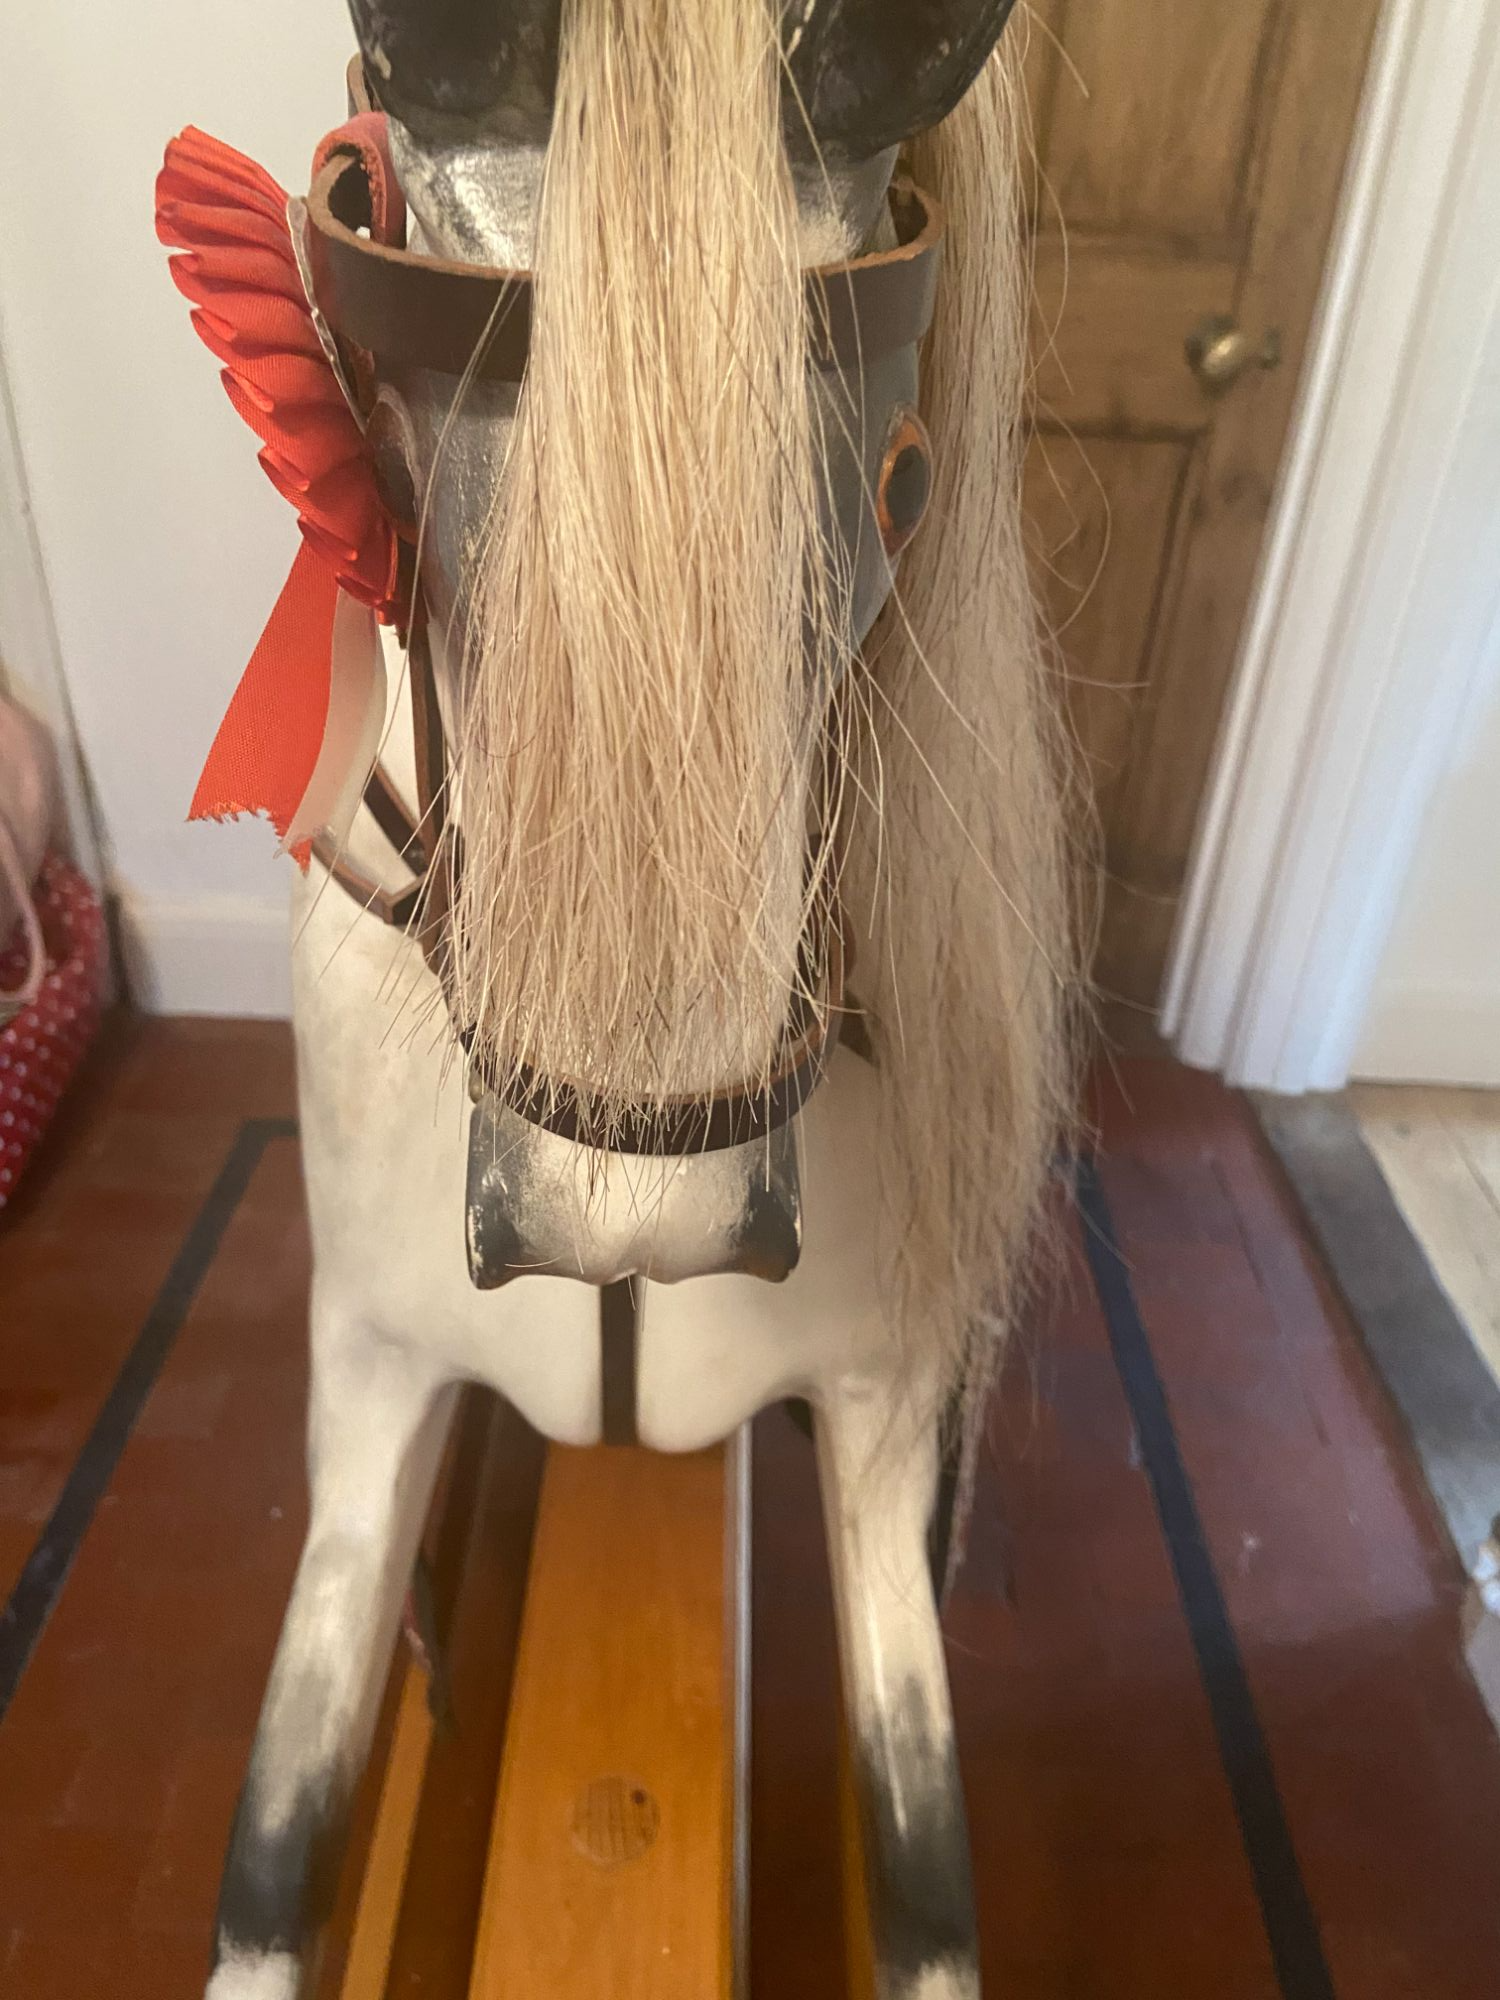 Dapple grey rocking horse for sale